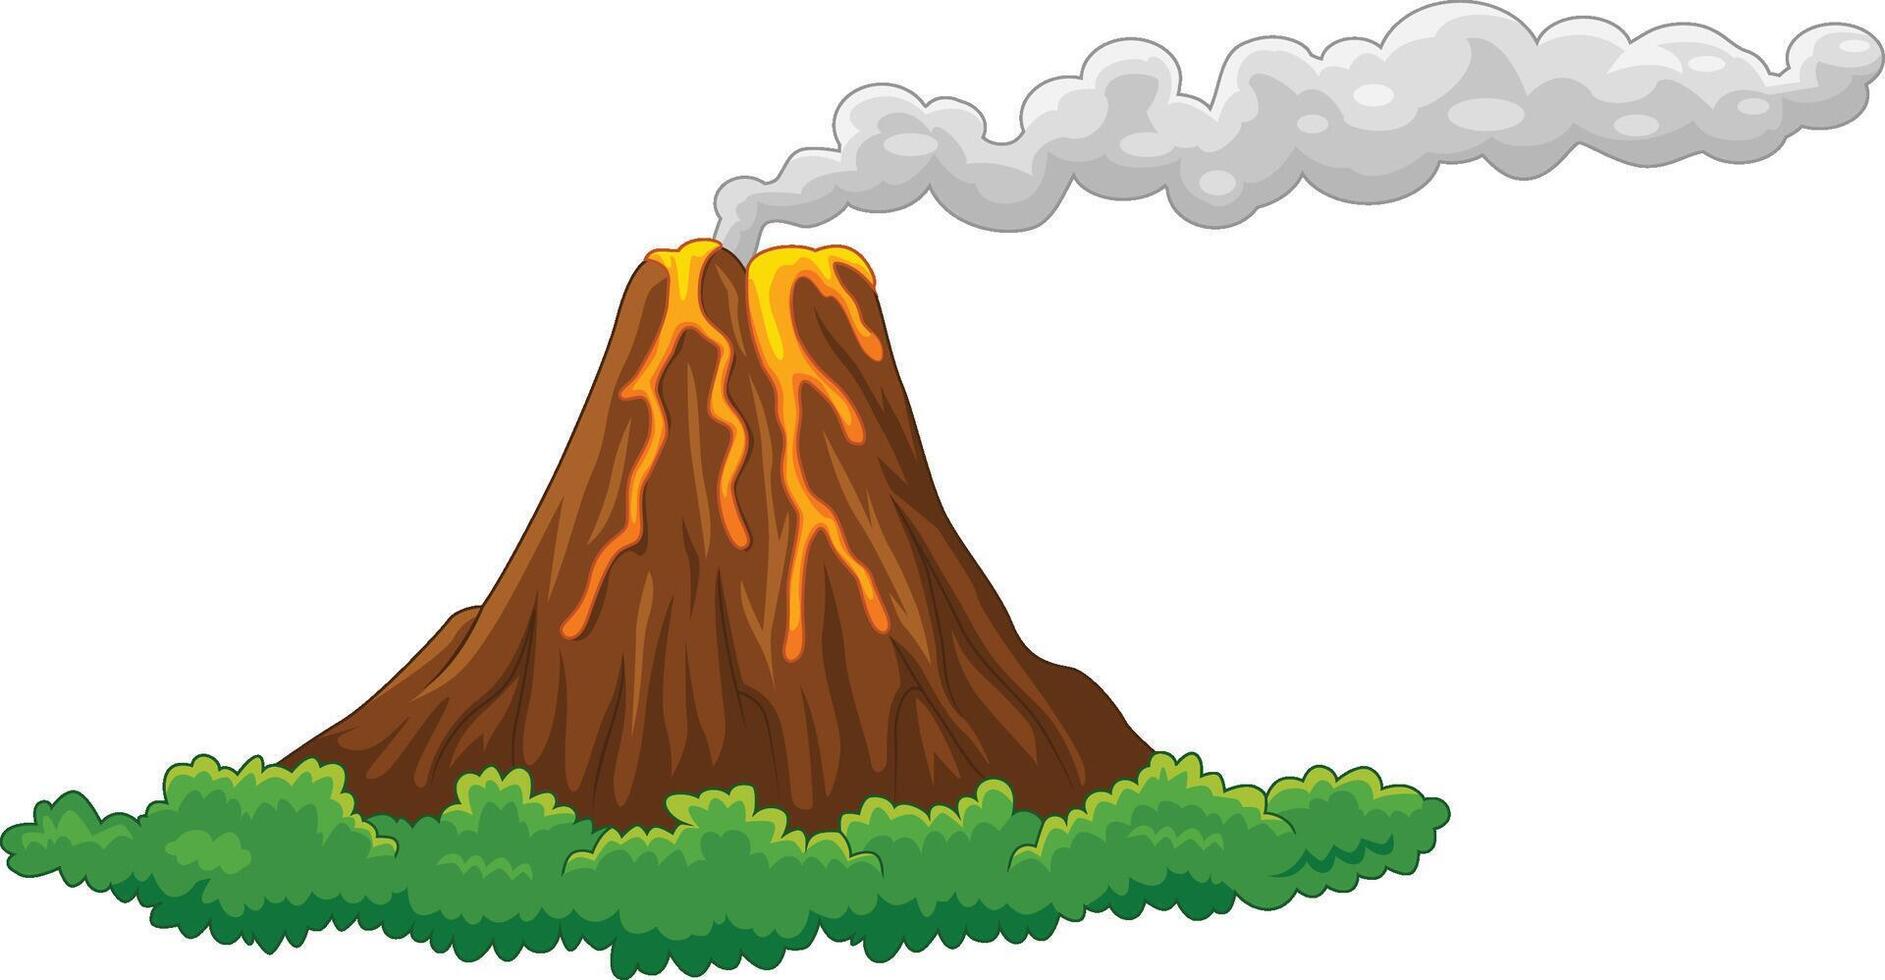 Volcano island erupting with lava vector